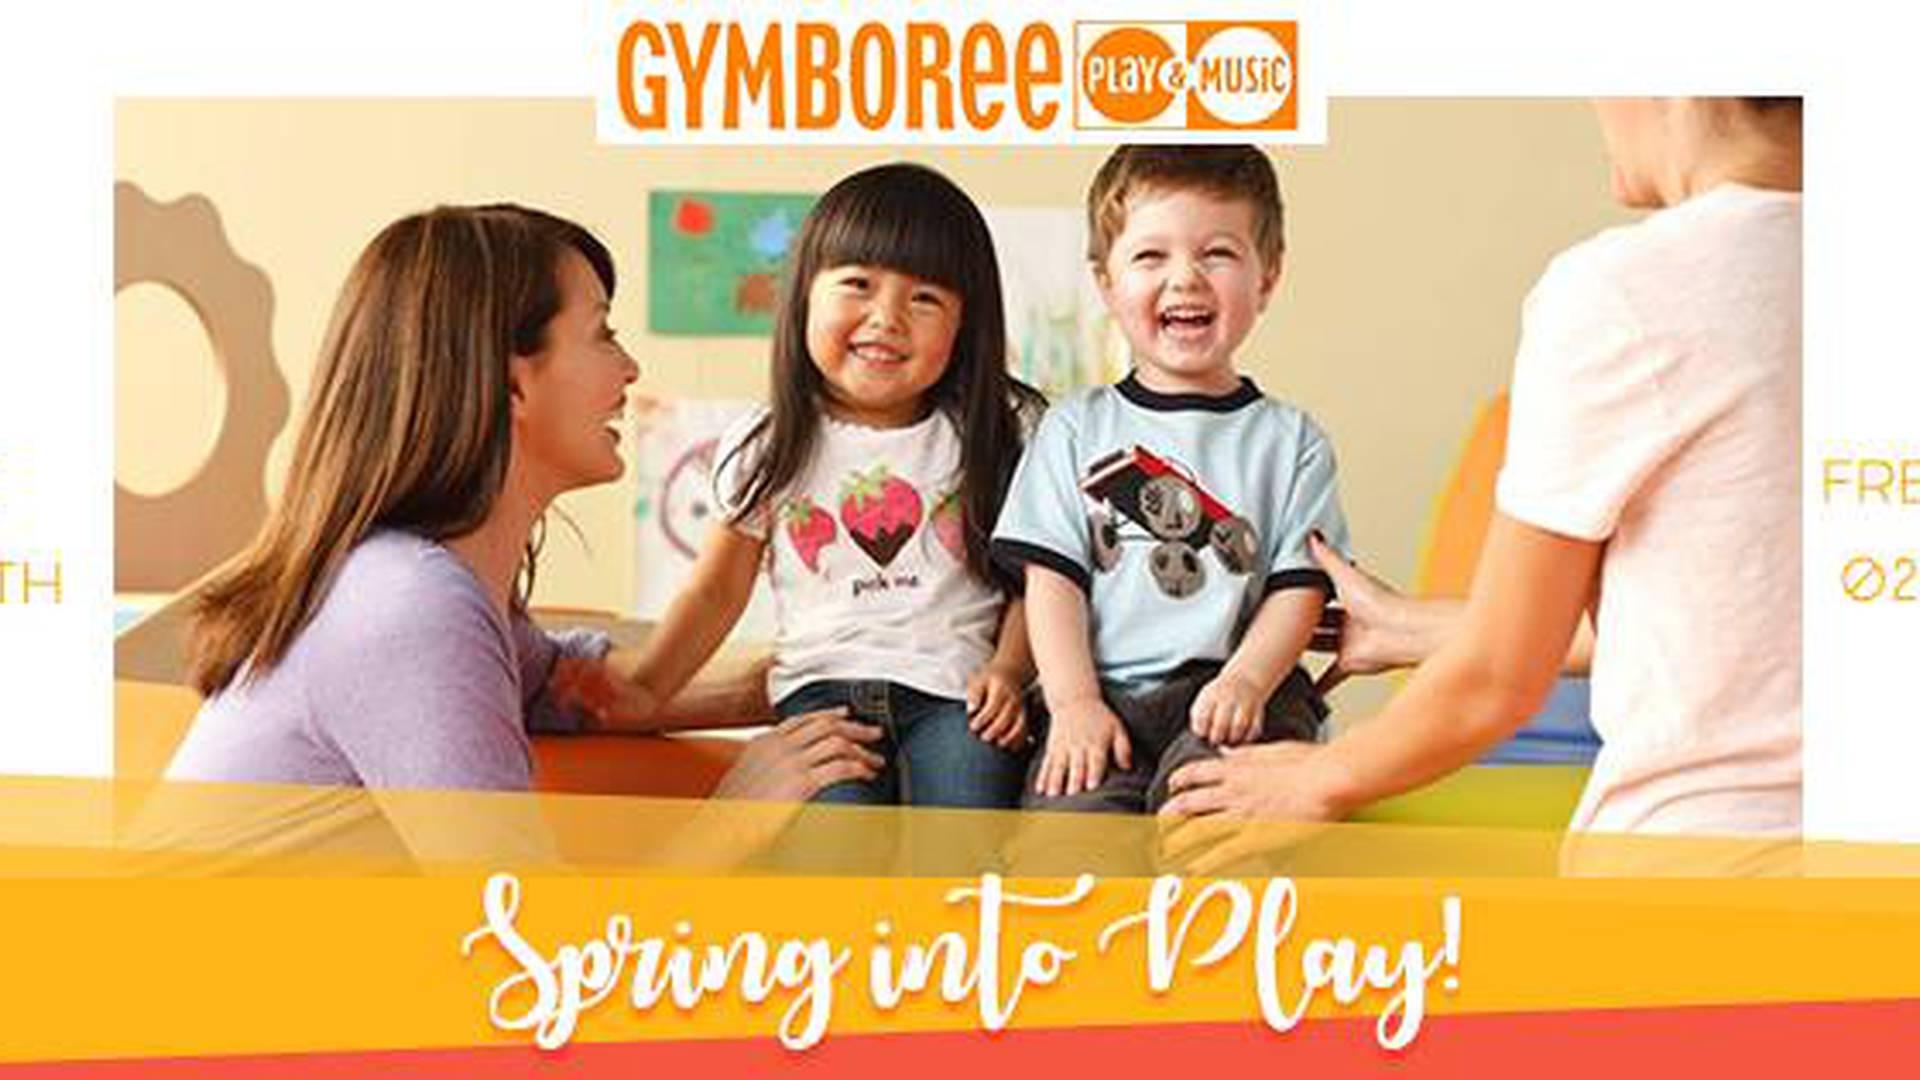 Gymboree Play & Music photo